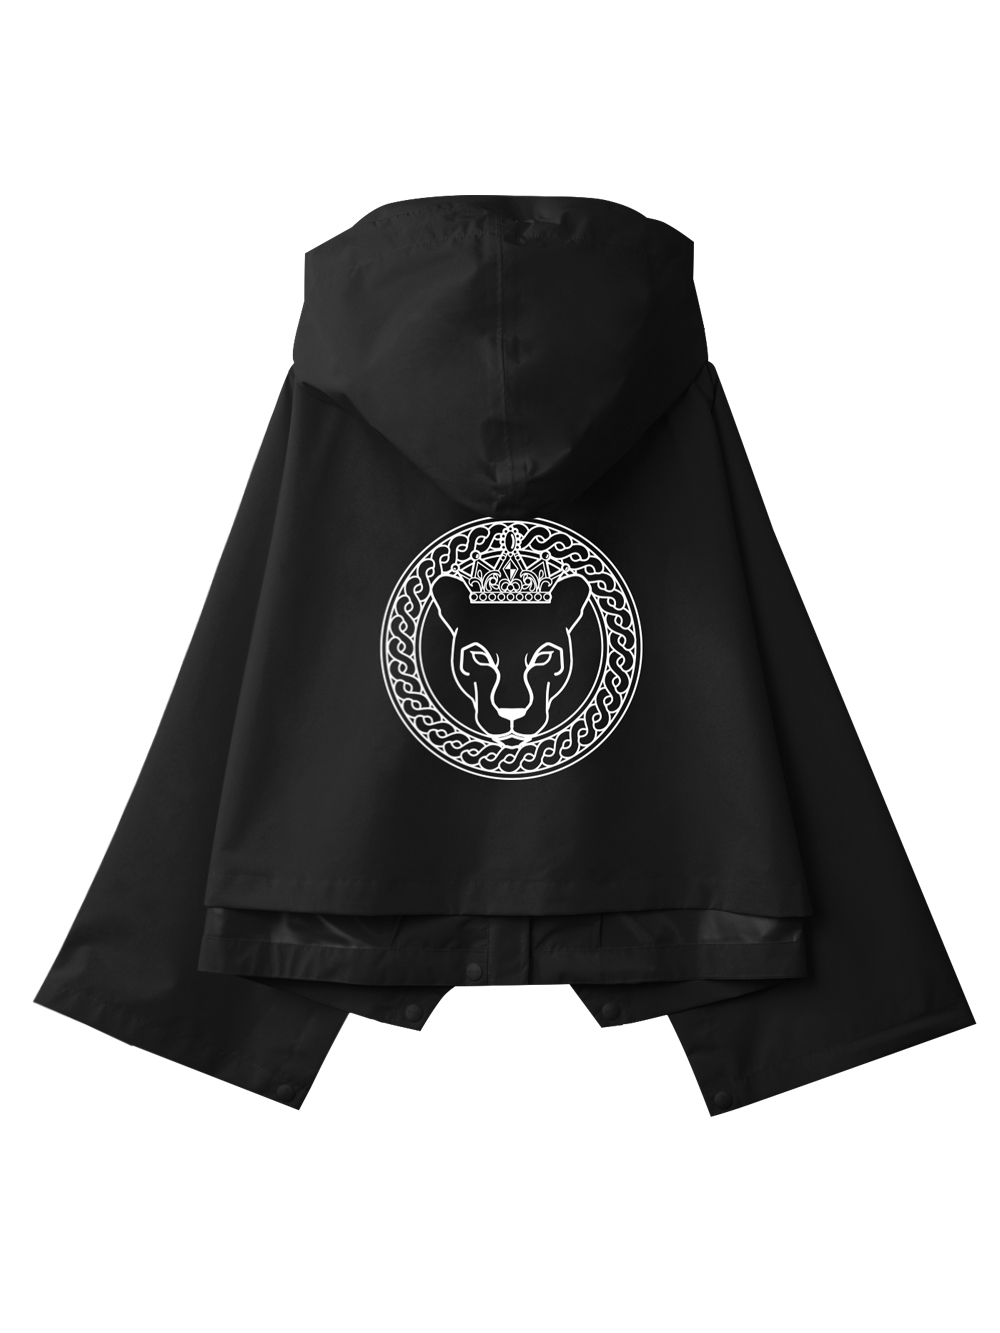 UTAA Scudo Ring Panther Poncho Raincoat : Women's Black (UD0RWF774BK